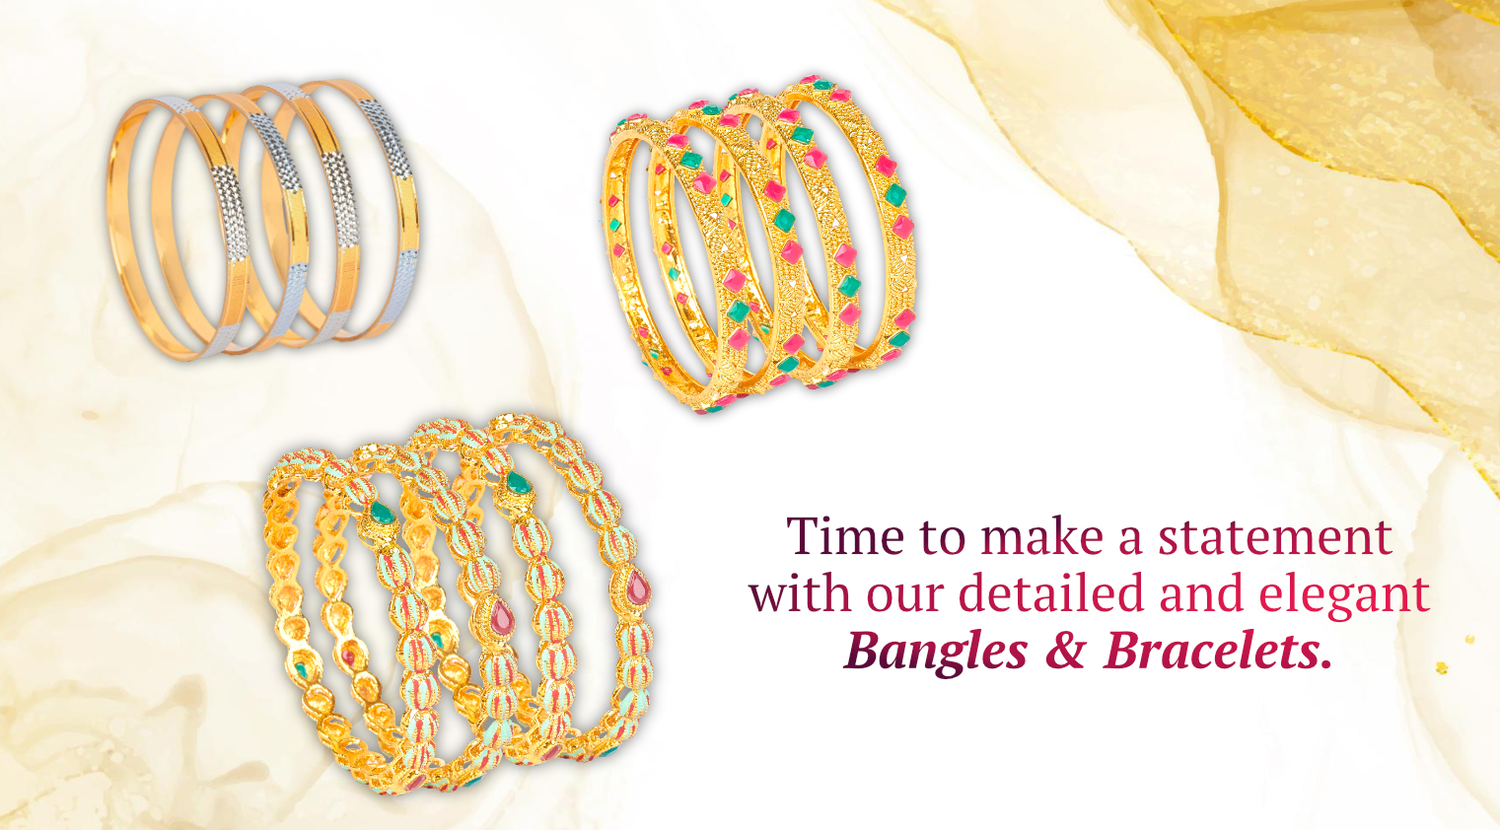 Bangles & Bracelets For Her